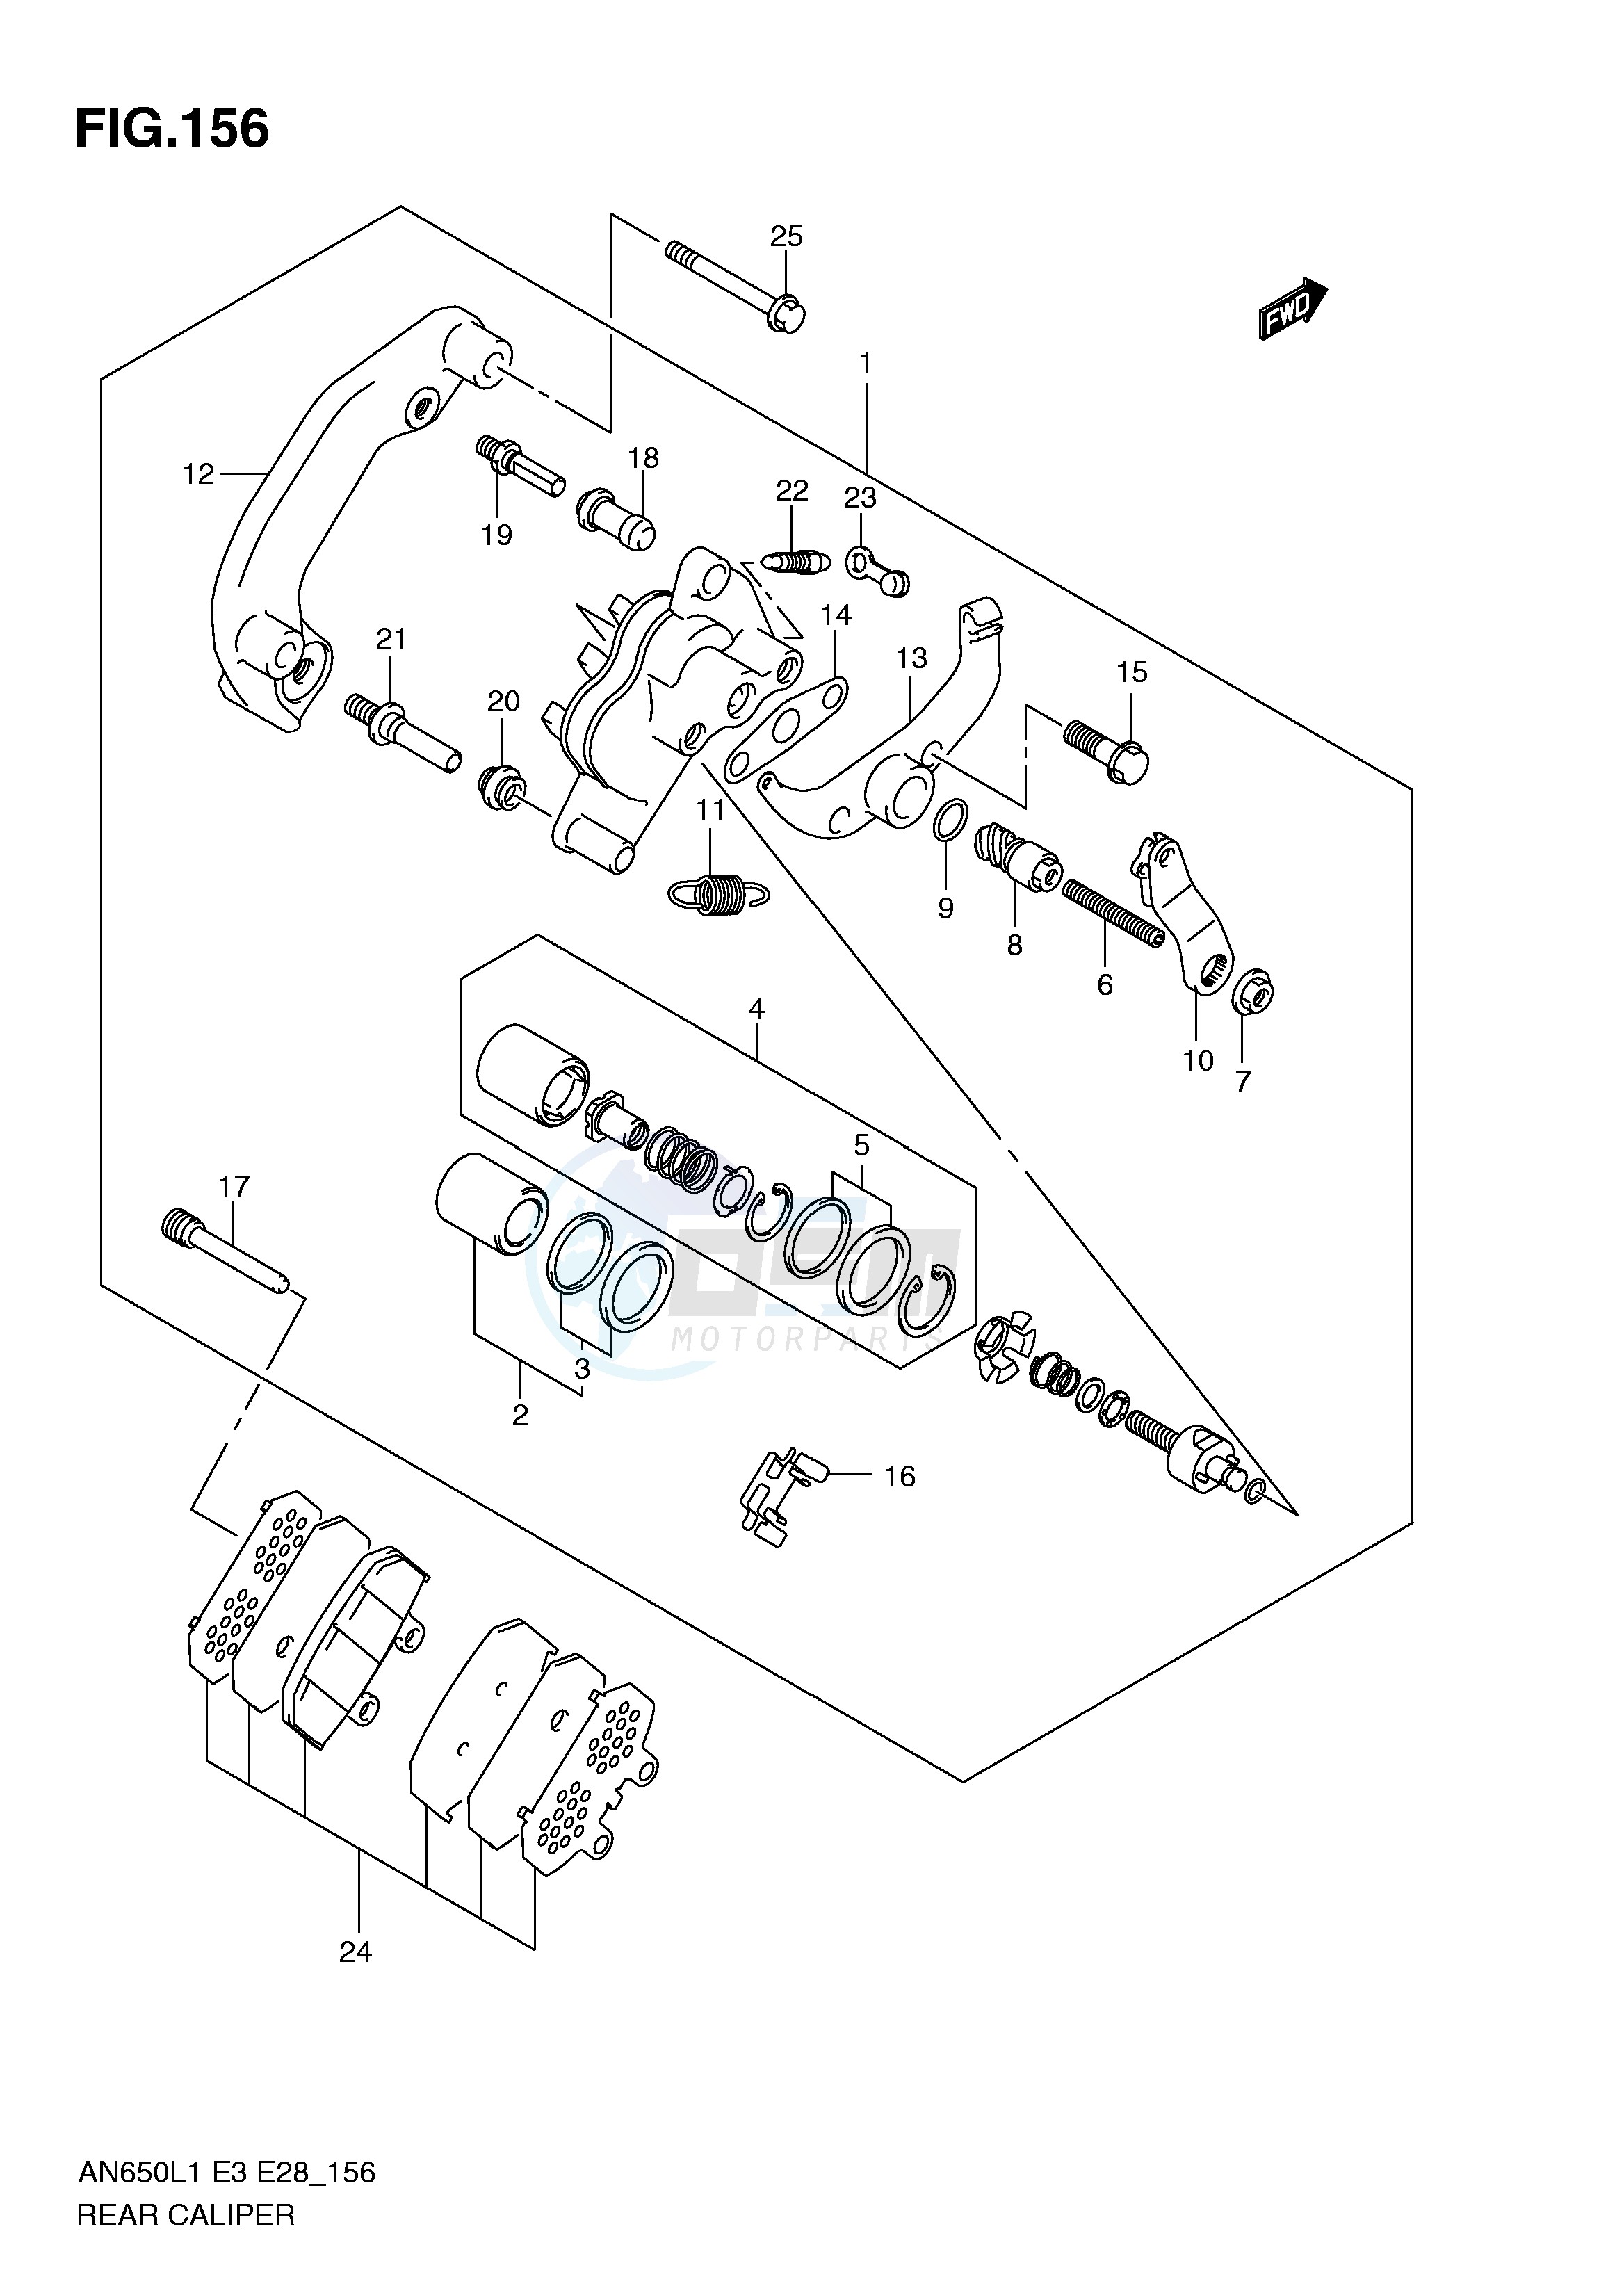 REAR CALIPER (AN650L1 E3) blueprint